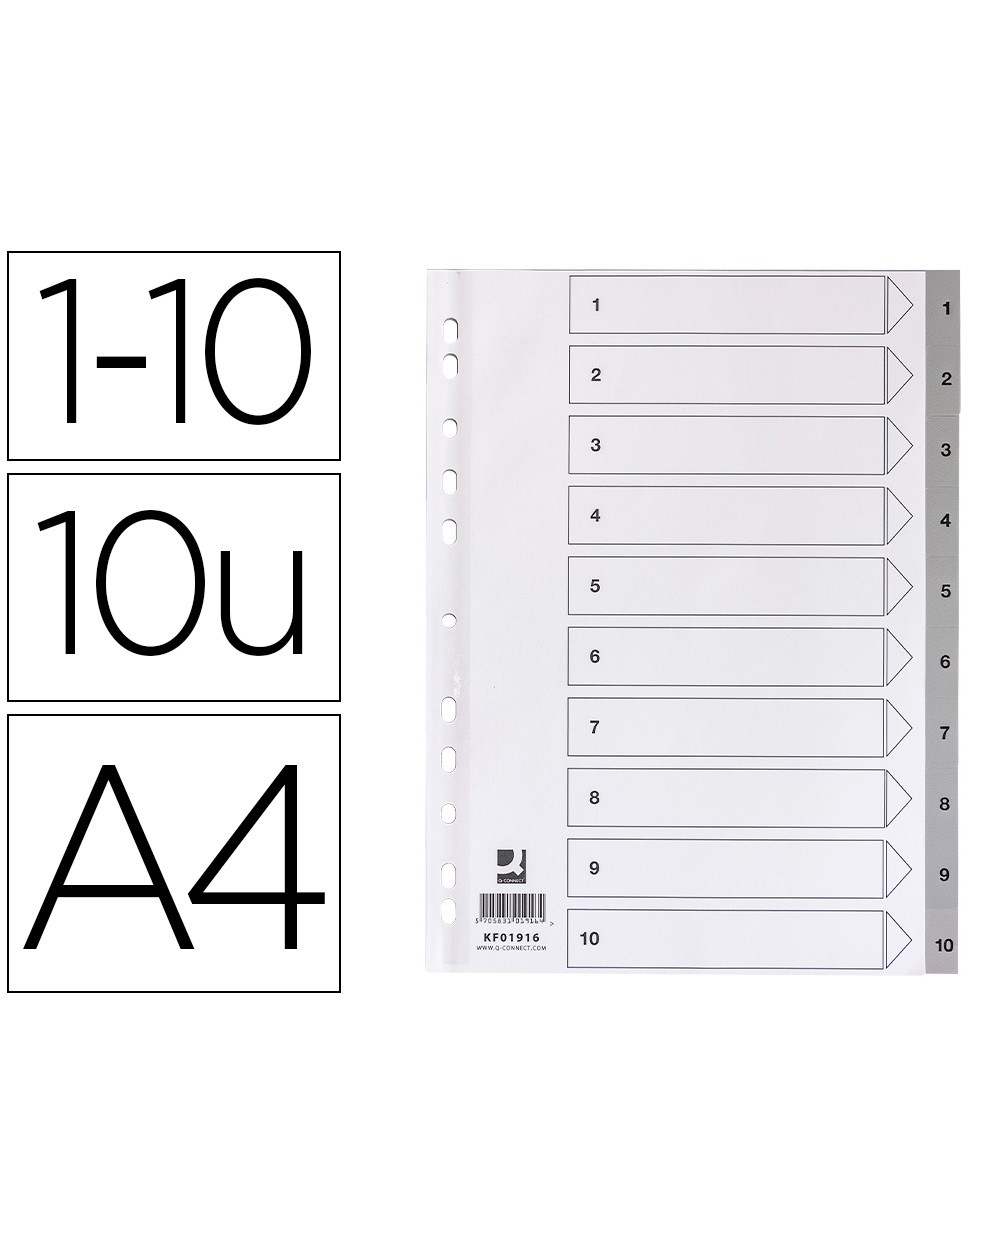 Separador numerico q connect plastico 1 10 juego de 10 separadores din a4 multitaladro